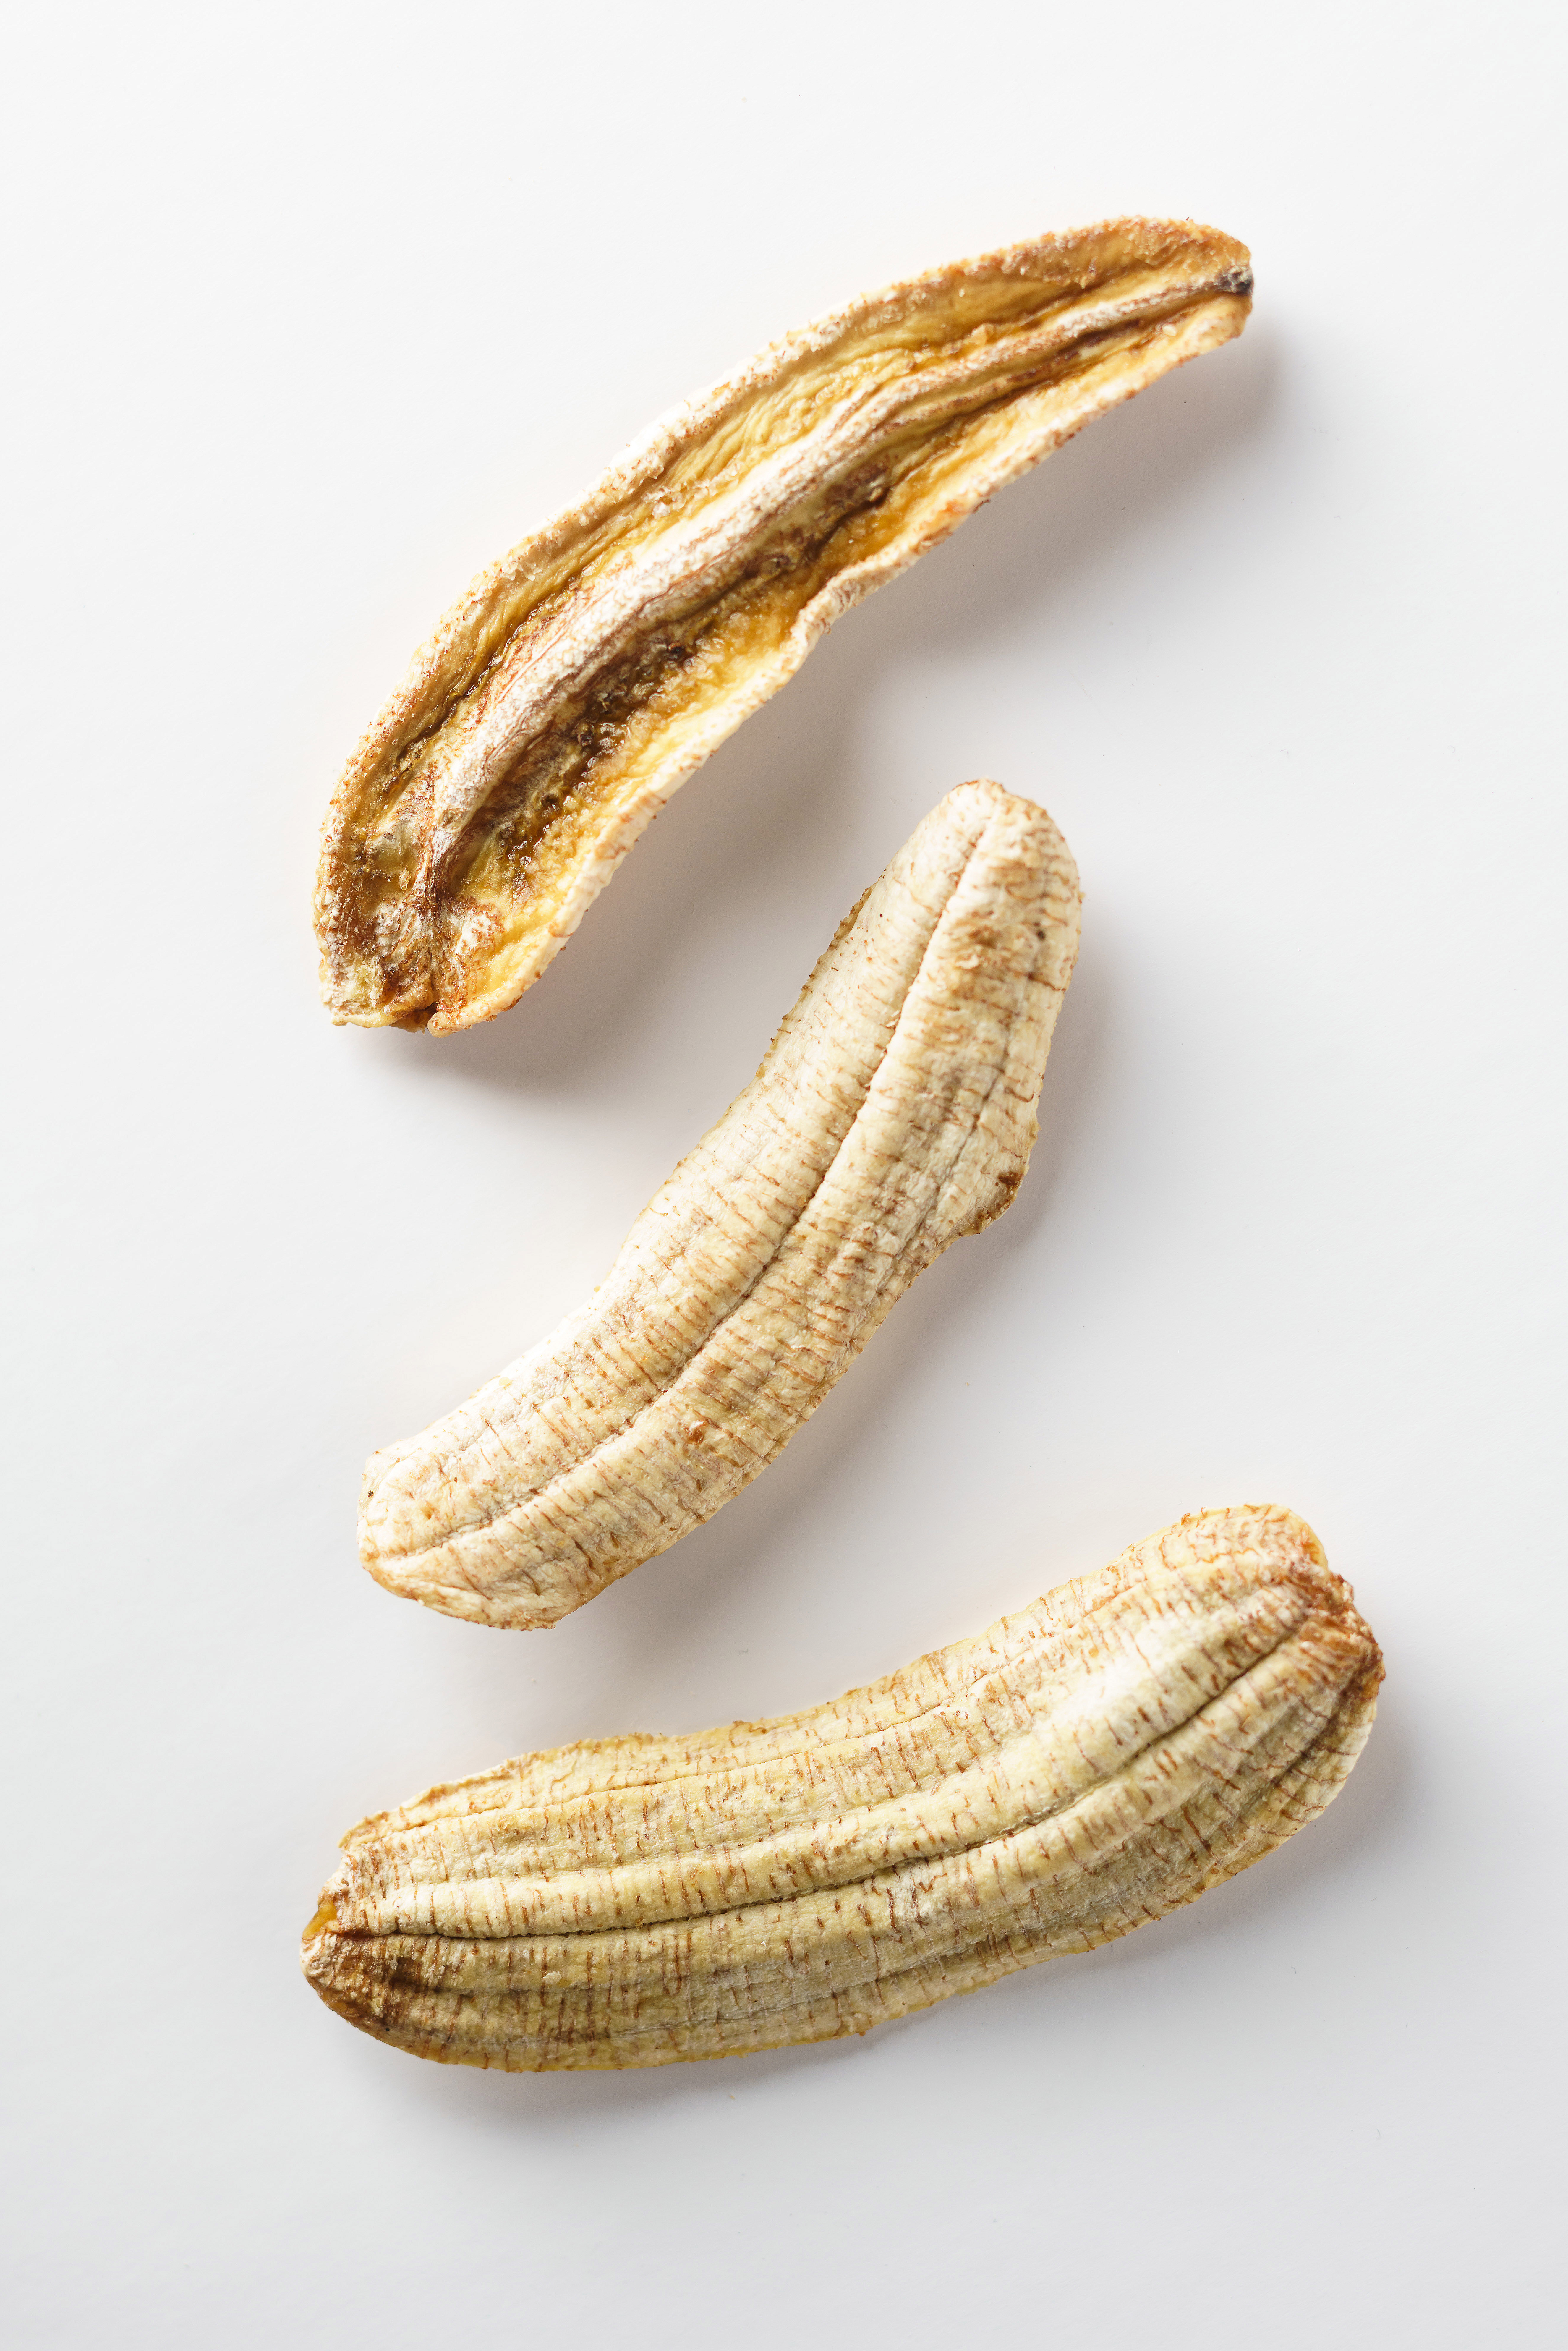 Dry Fruits Banane bio séchée en vrac de Supersec